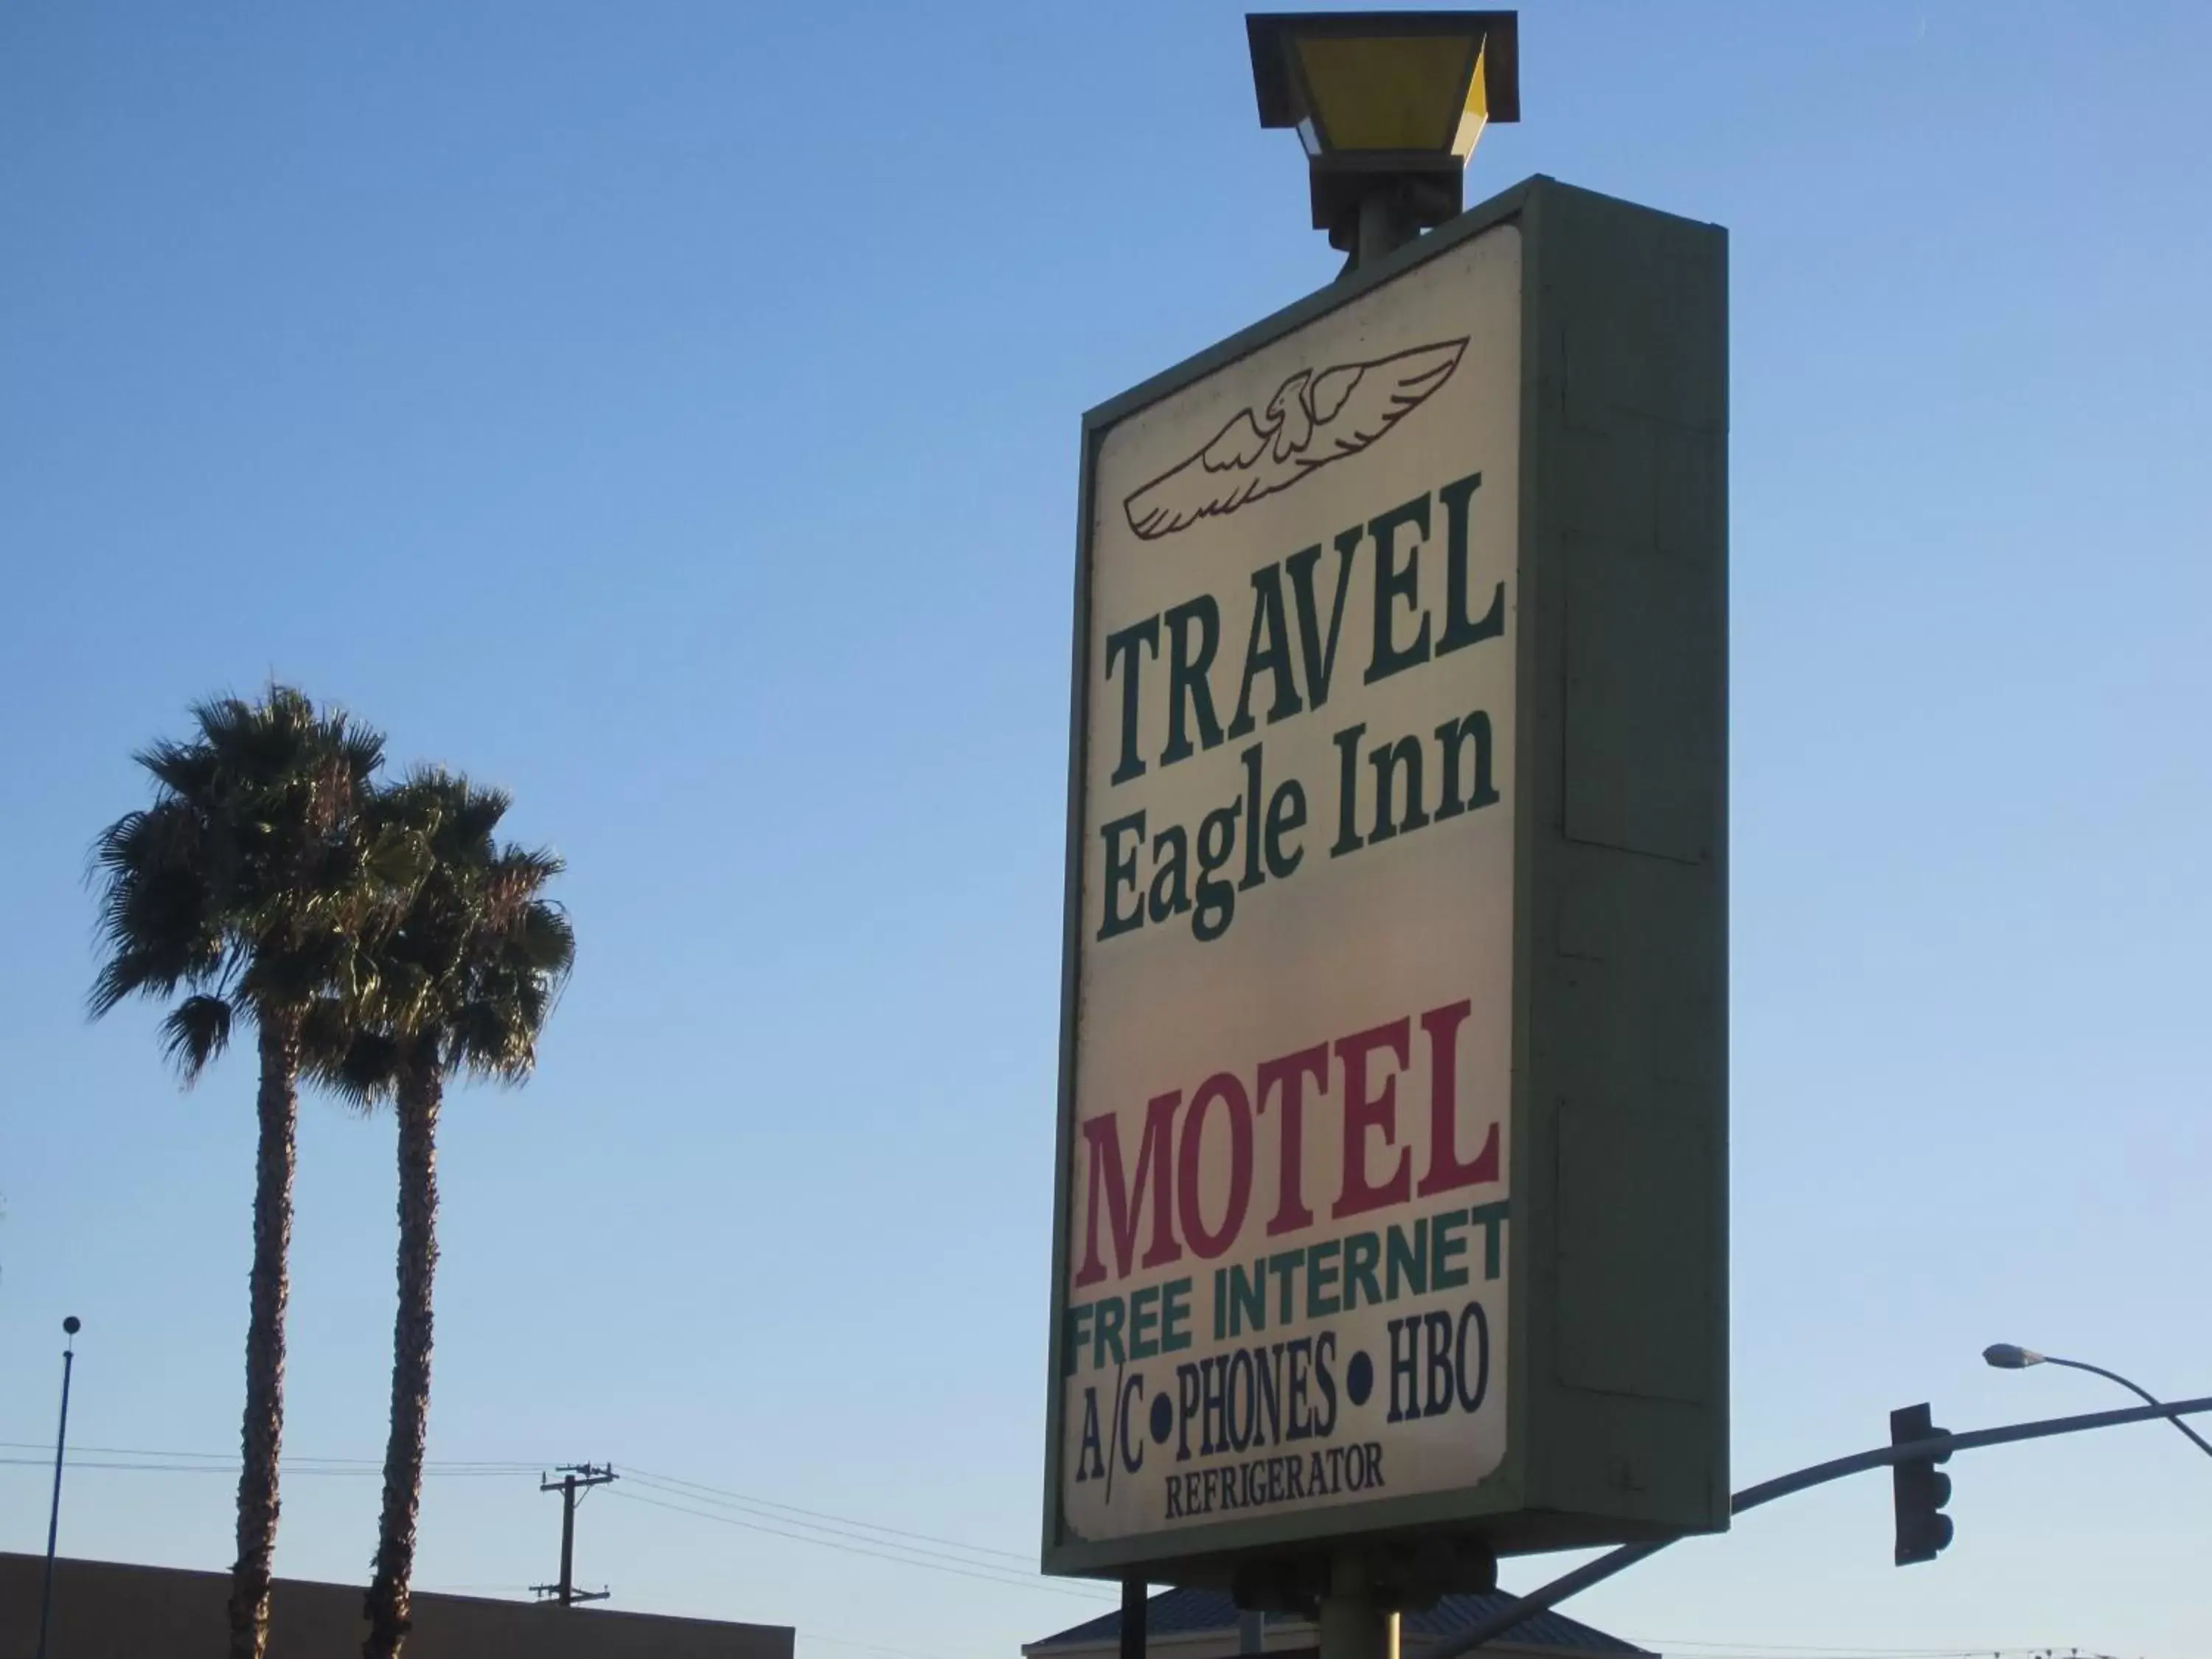 Property logo or sign, Property Logo/Sign in Travel Eagle Inn Motel